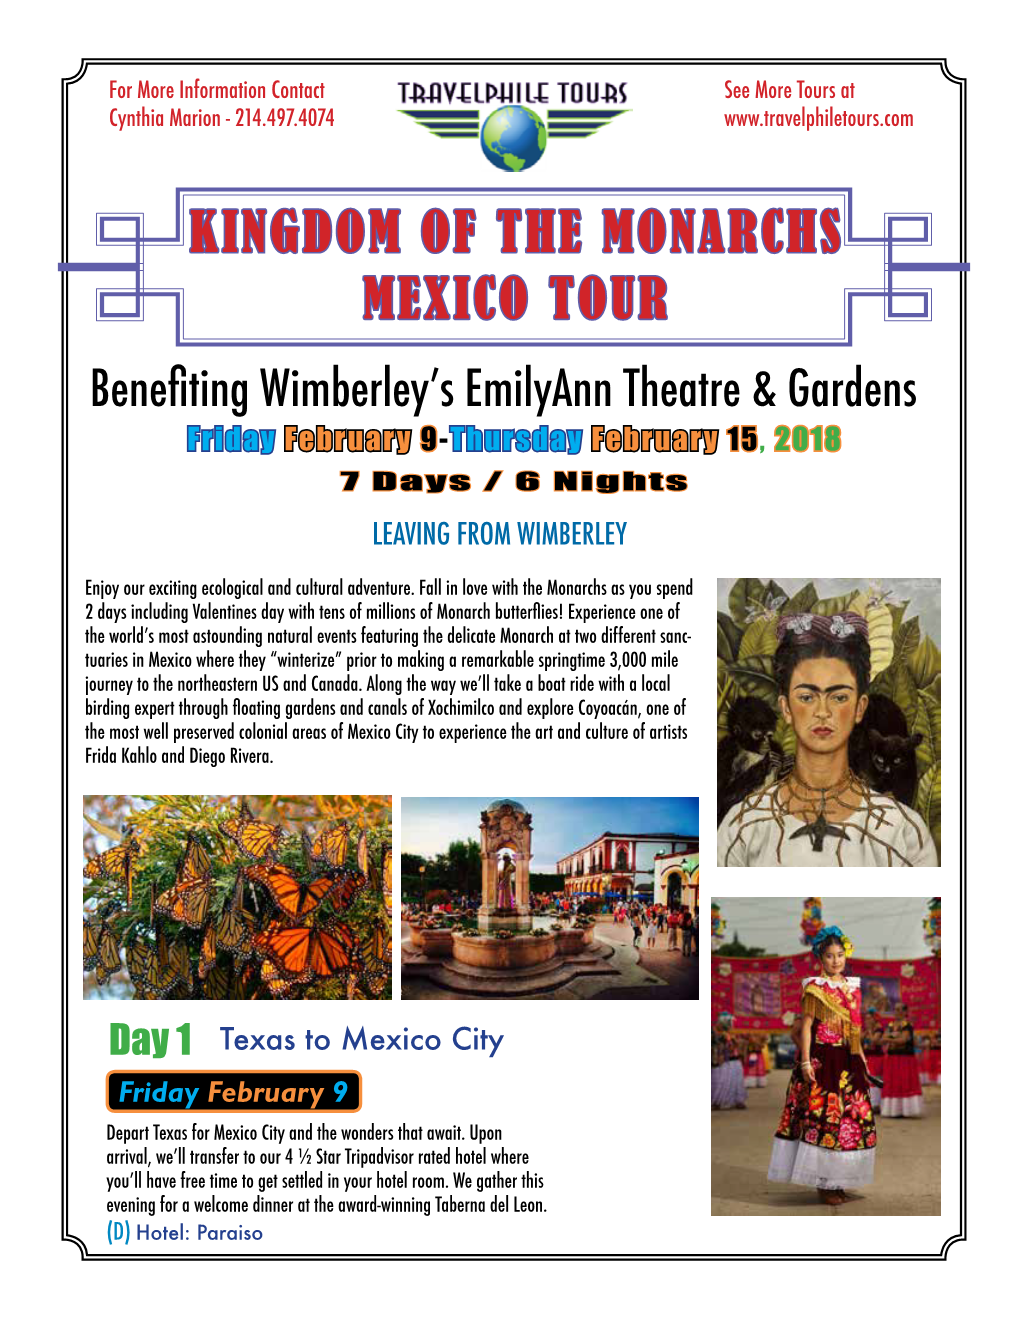 Kingdom of the Monarchs Mexico Tour